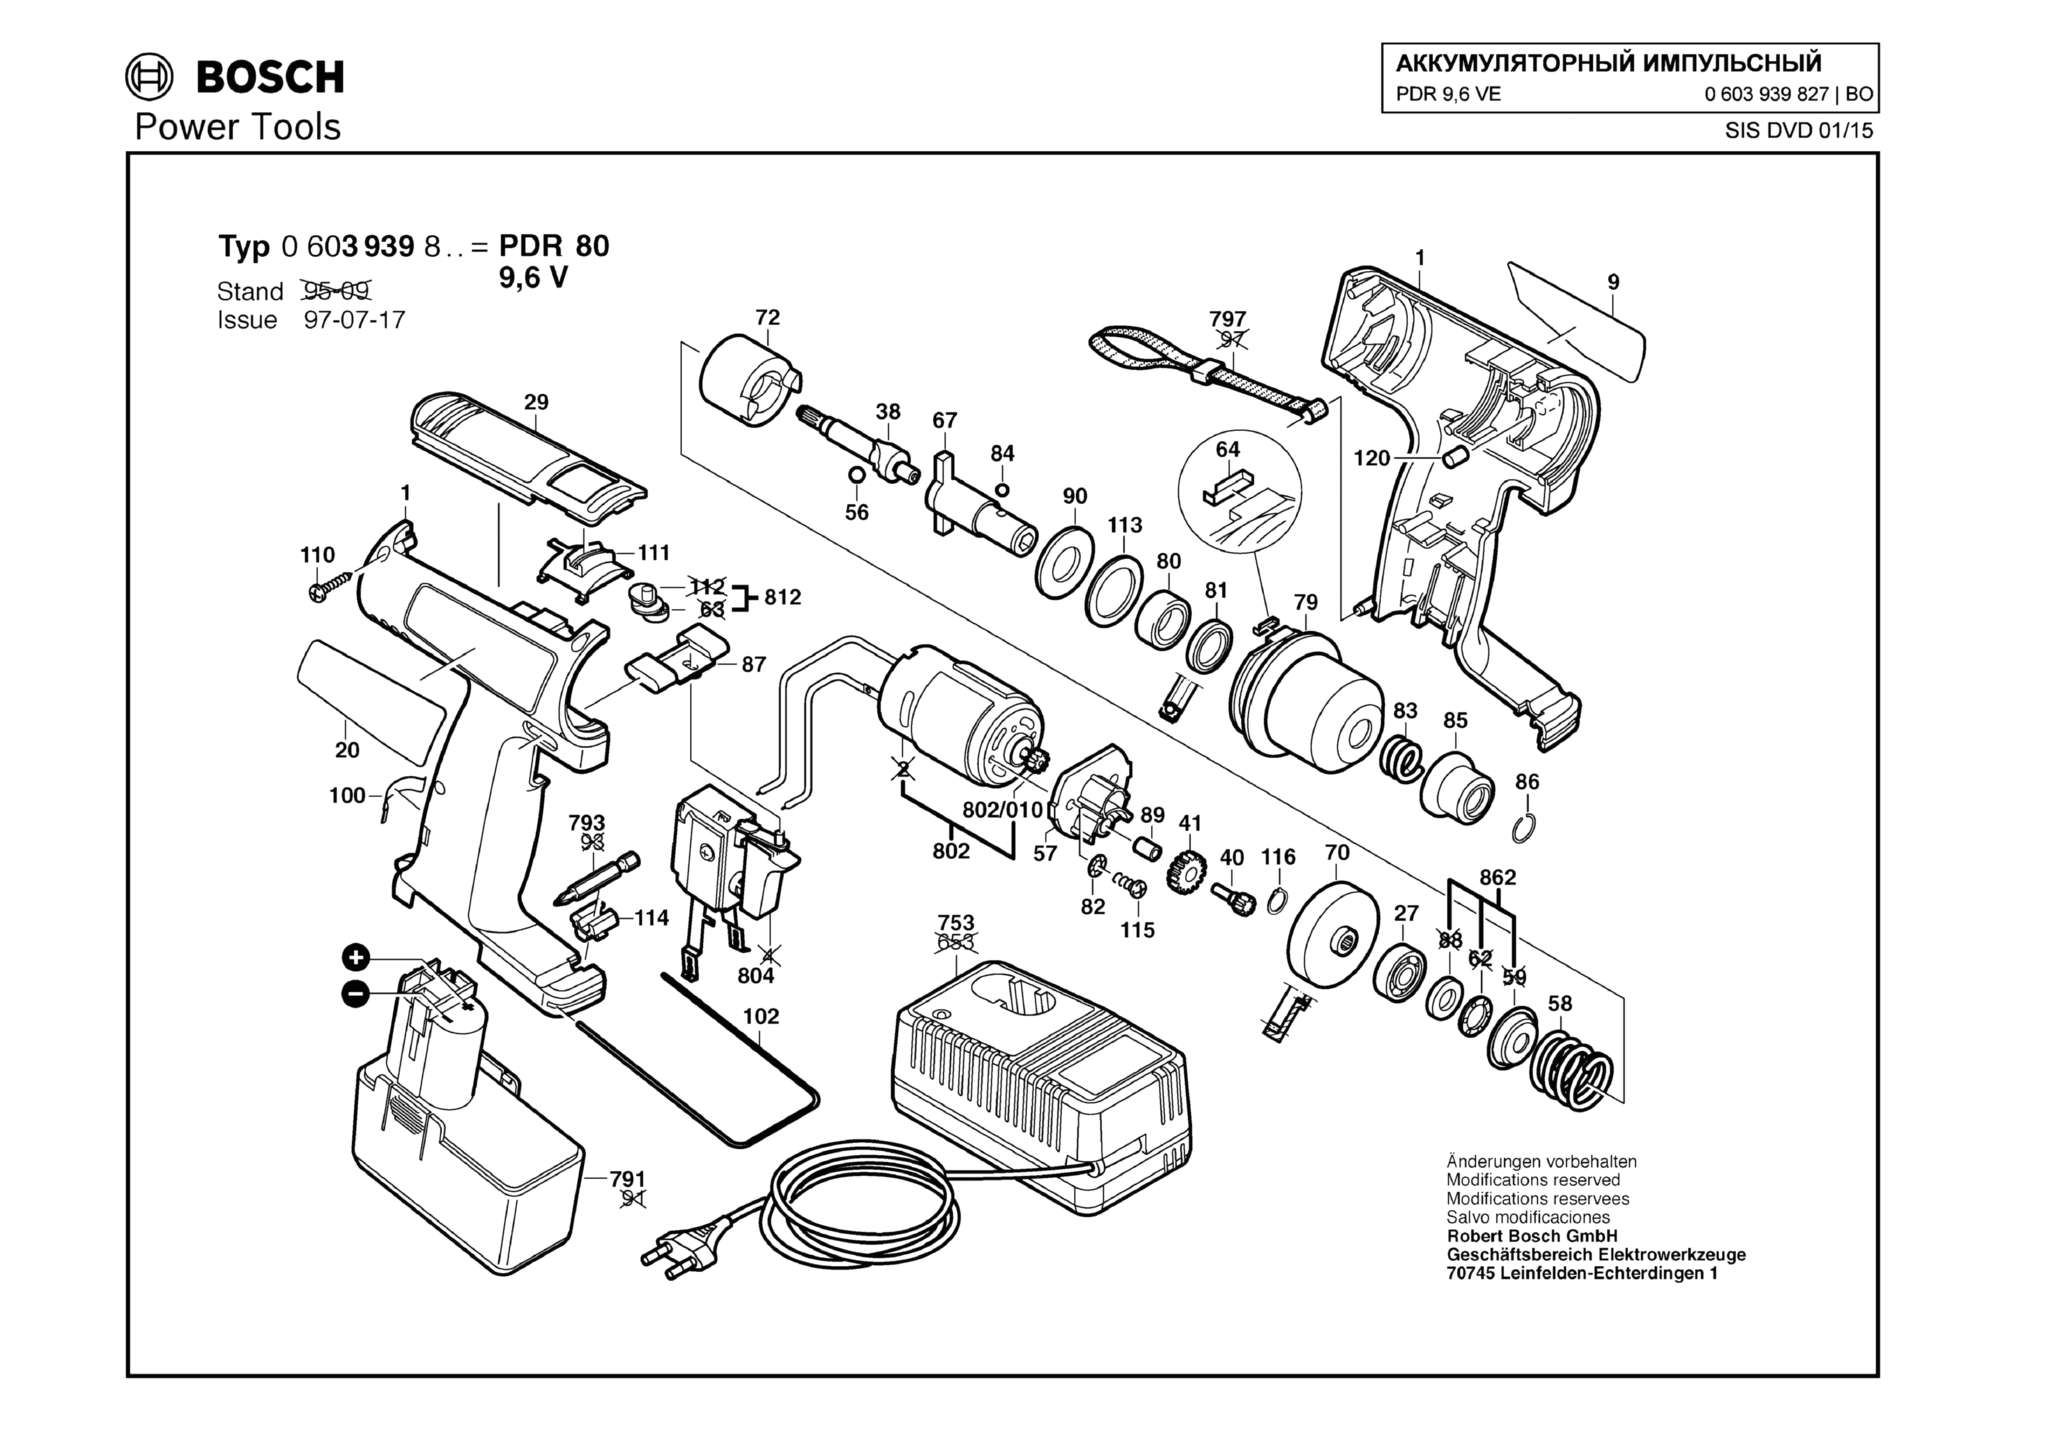 Запчасти, схема и деталировка Bosch PDR 9,6 VE (ТИП 0603939827)